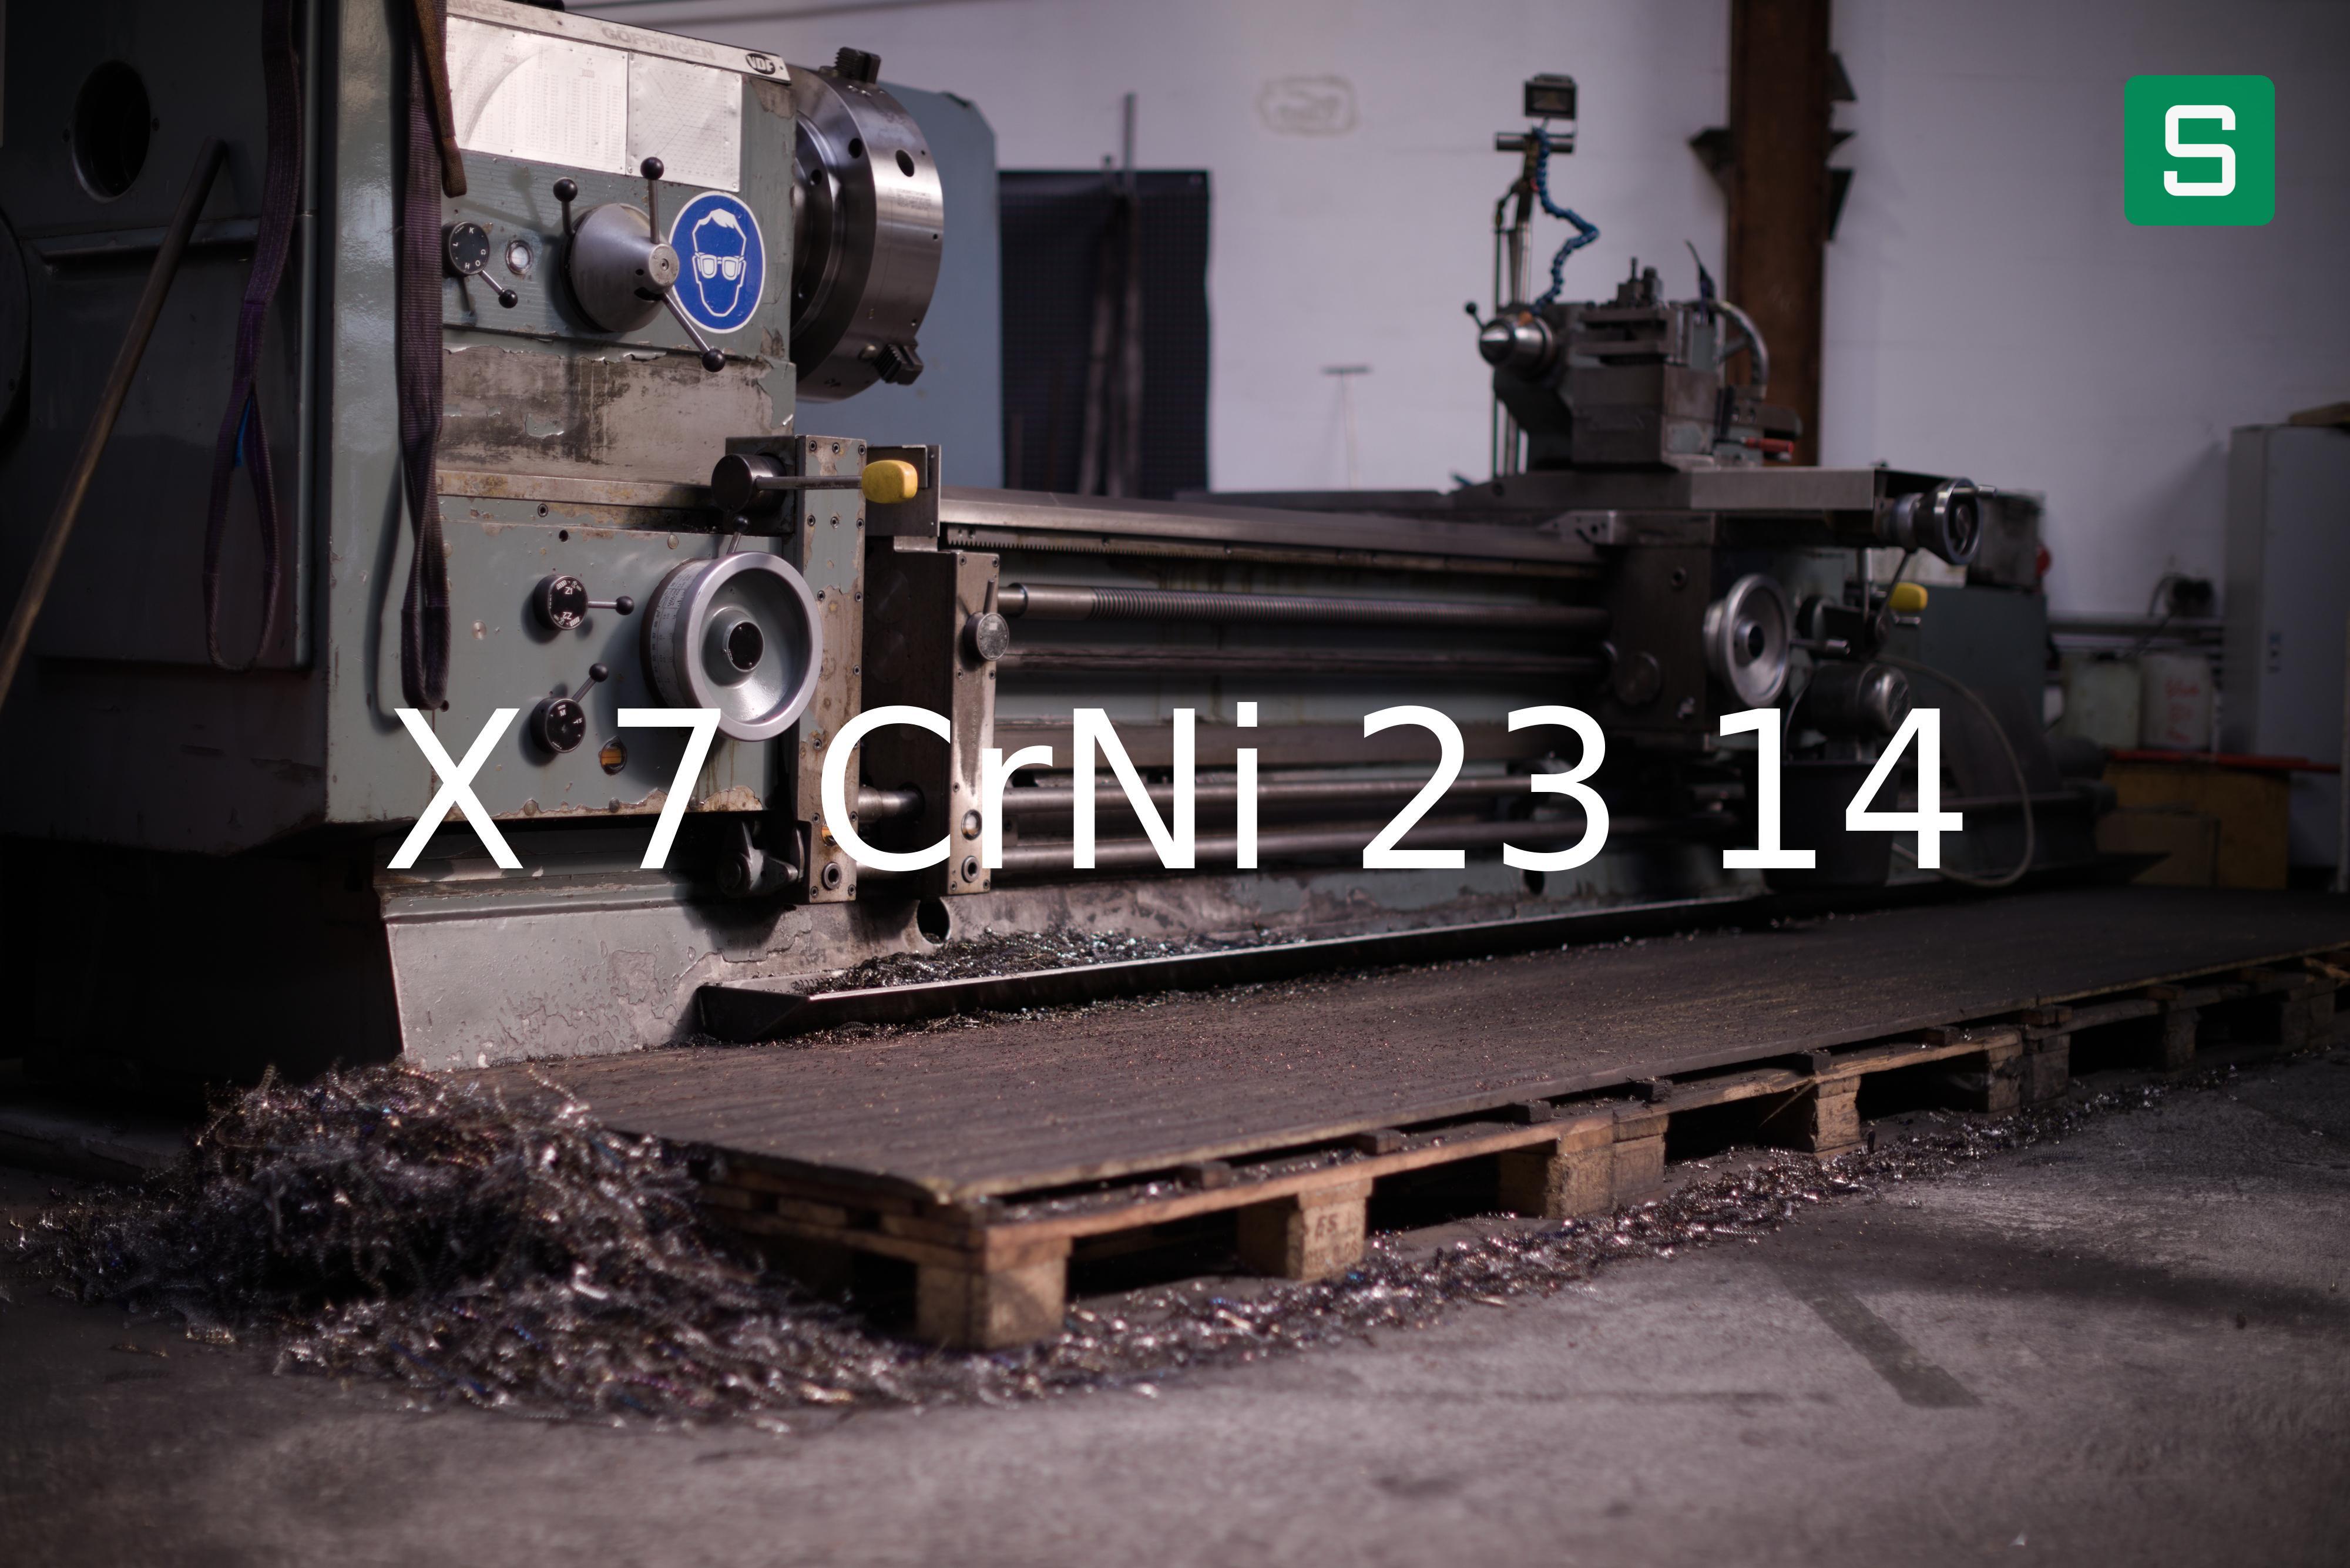 Steel Material: X 7 CrNi 23 14